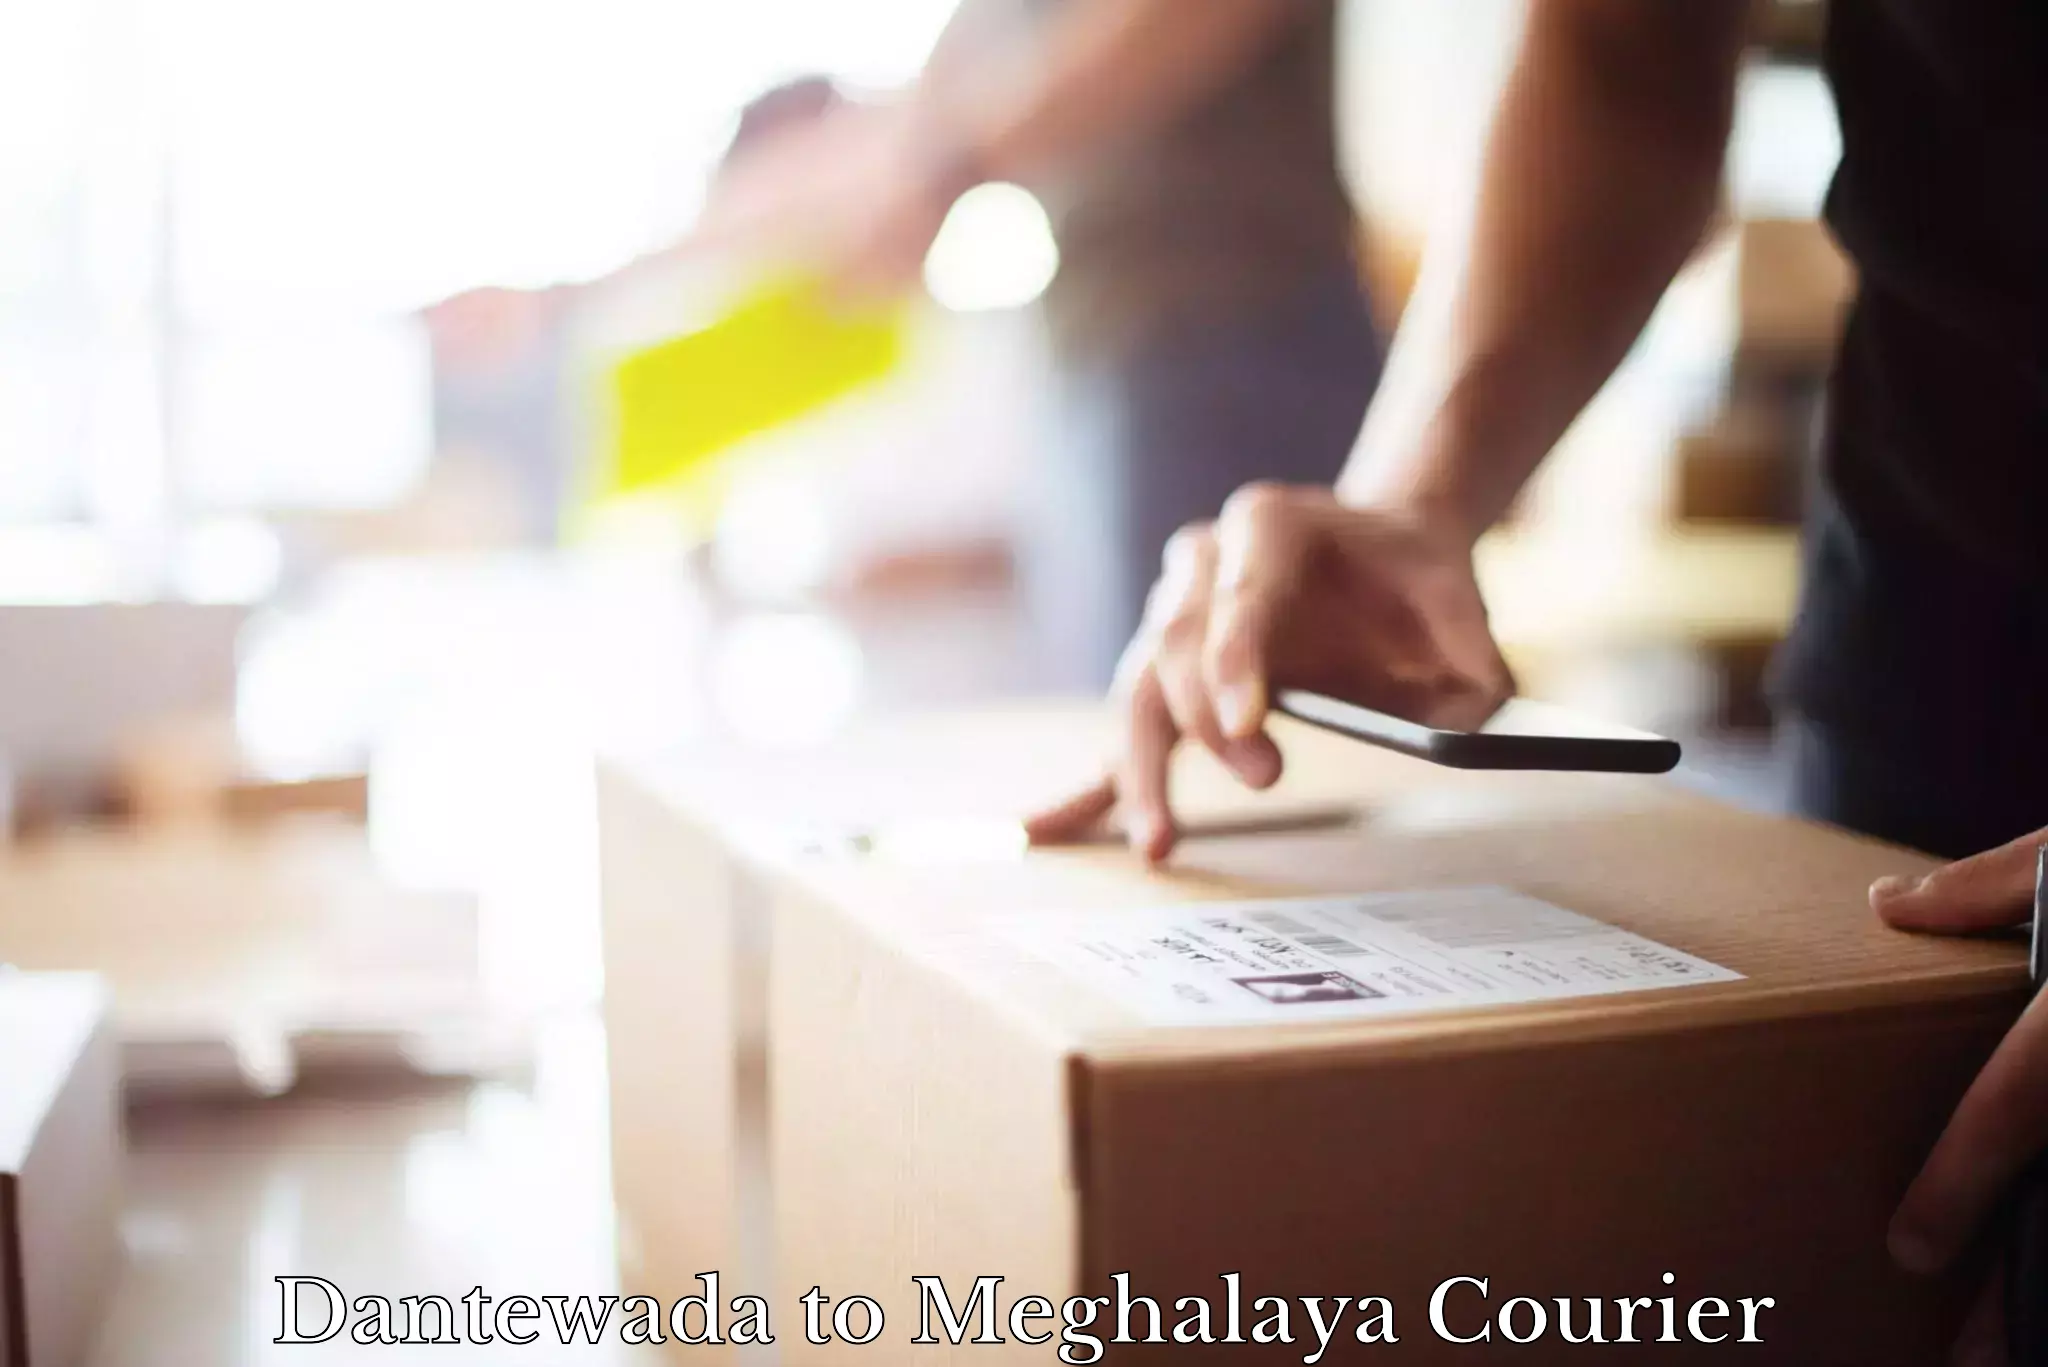 Courier service comparison in Dantewada to Meghalaya